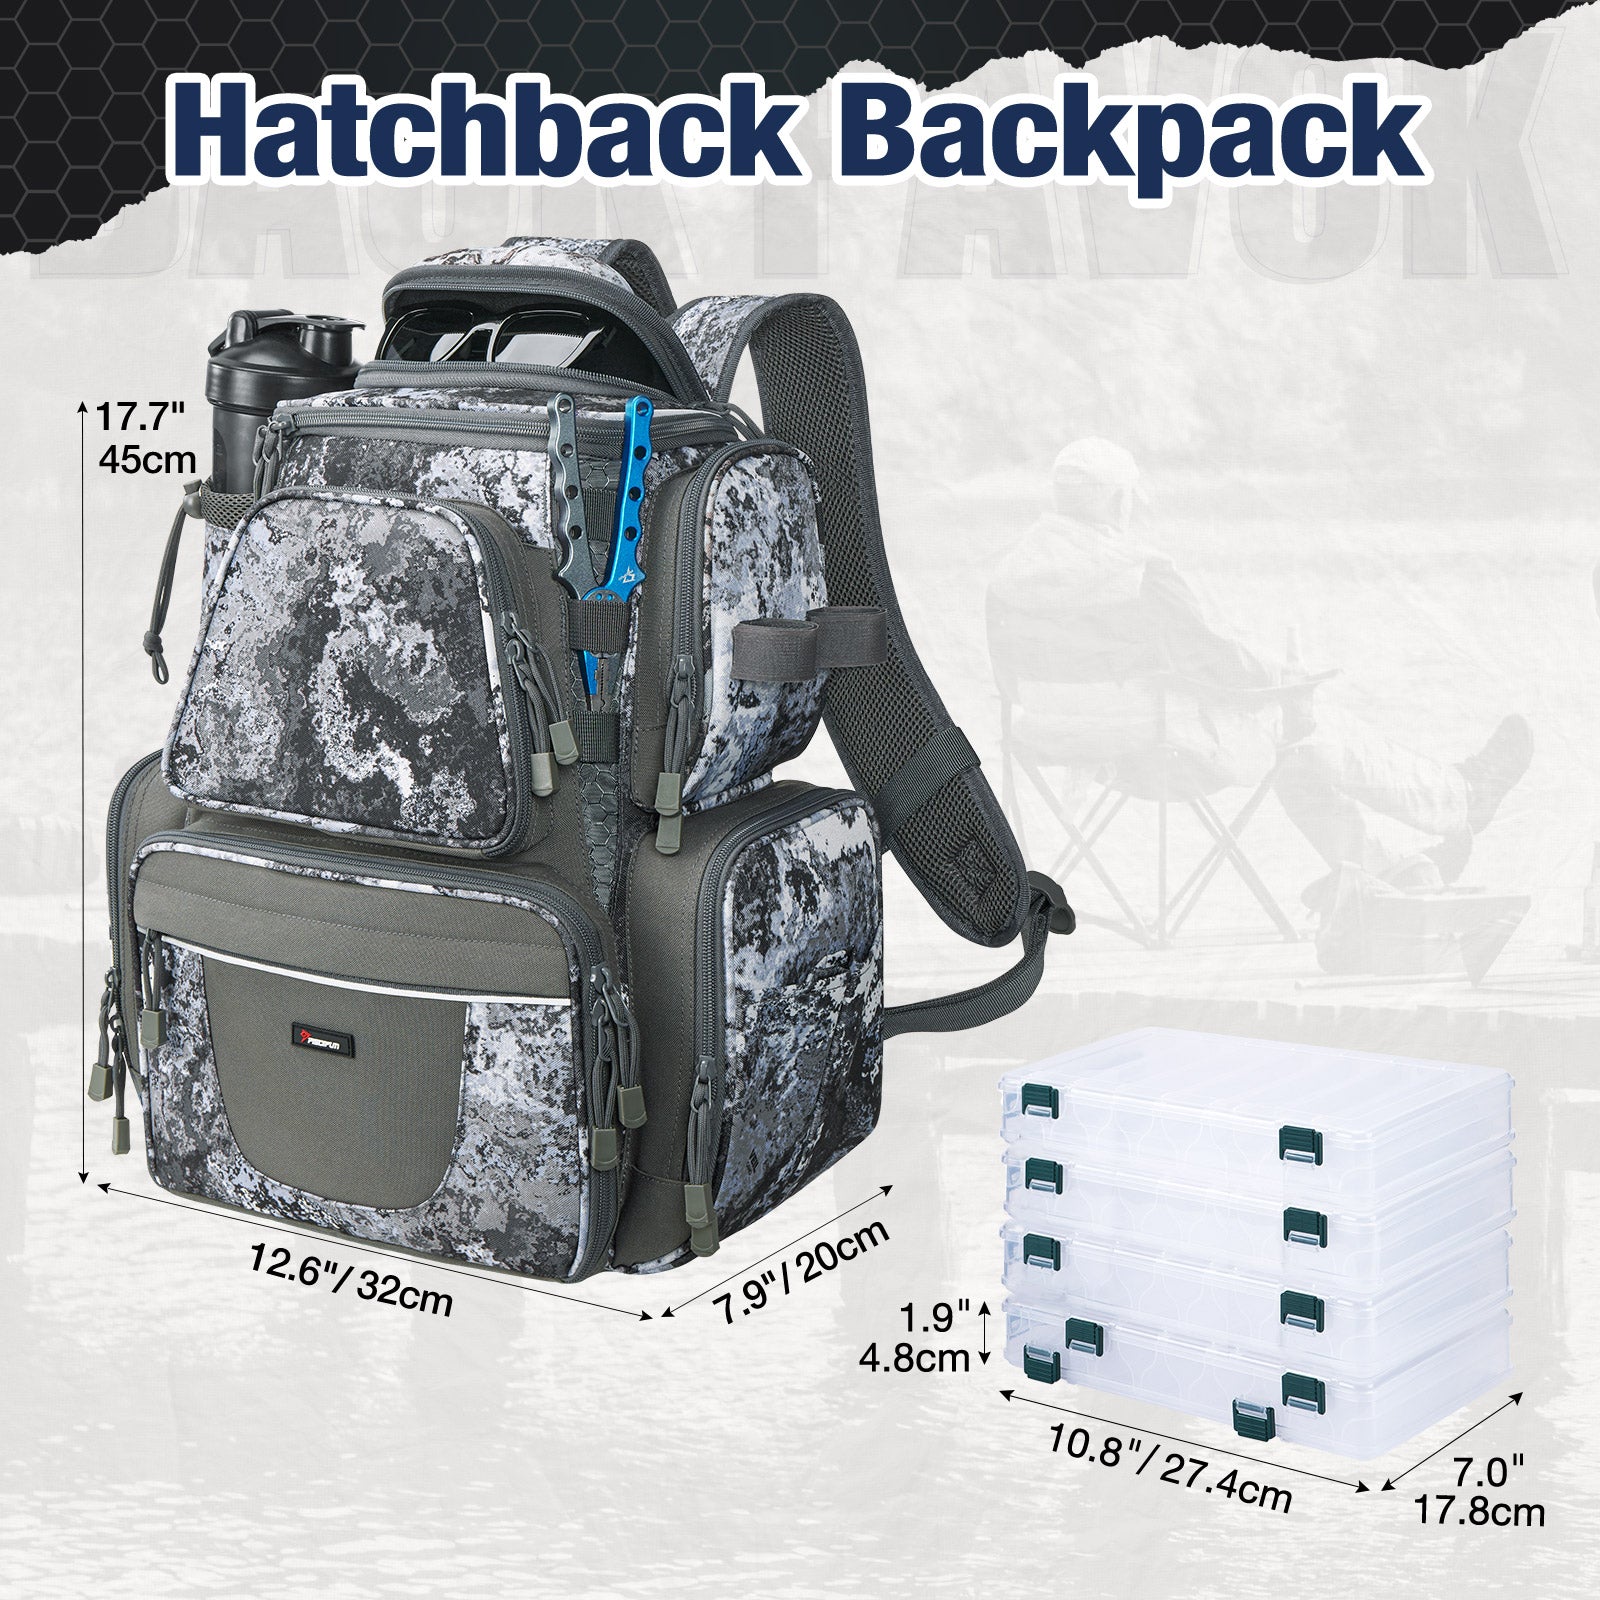 Fishing backpacks : r/Fishing_Gear